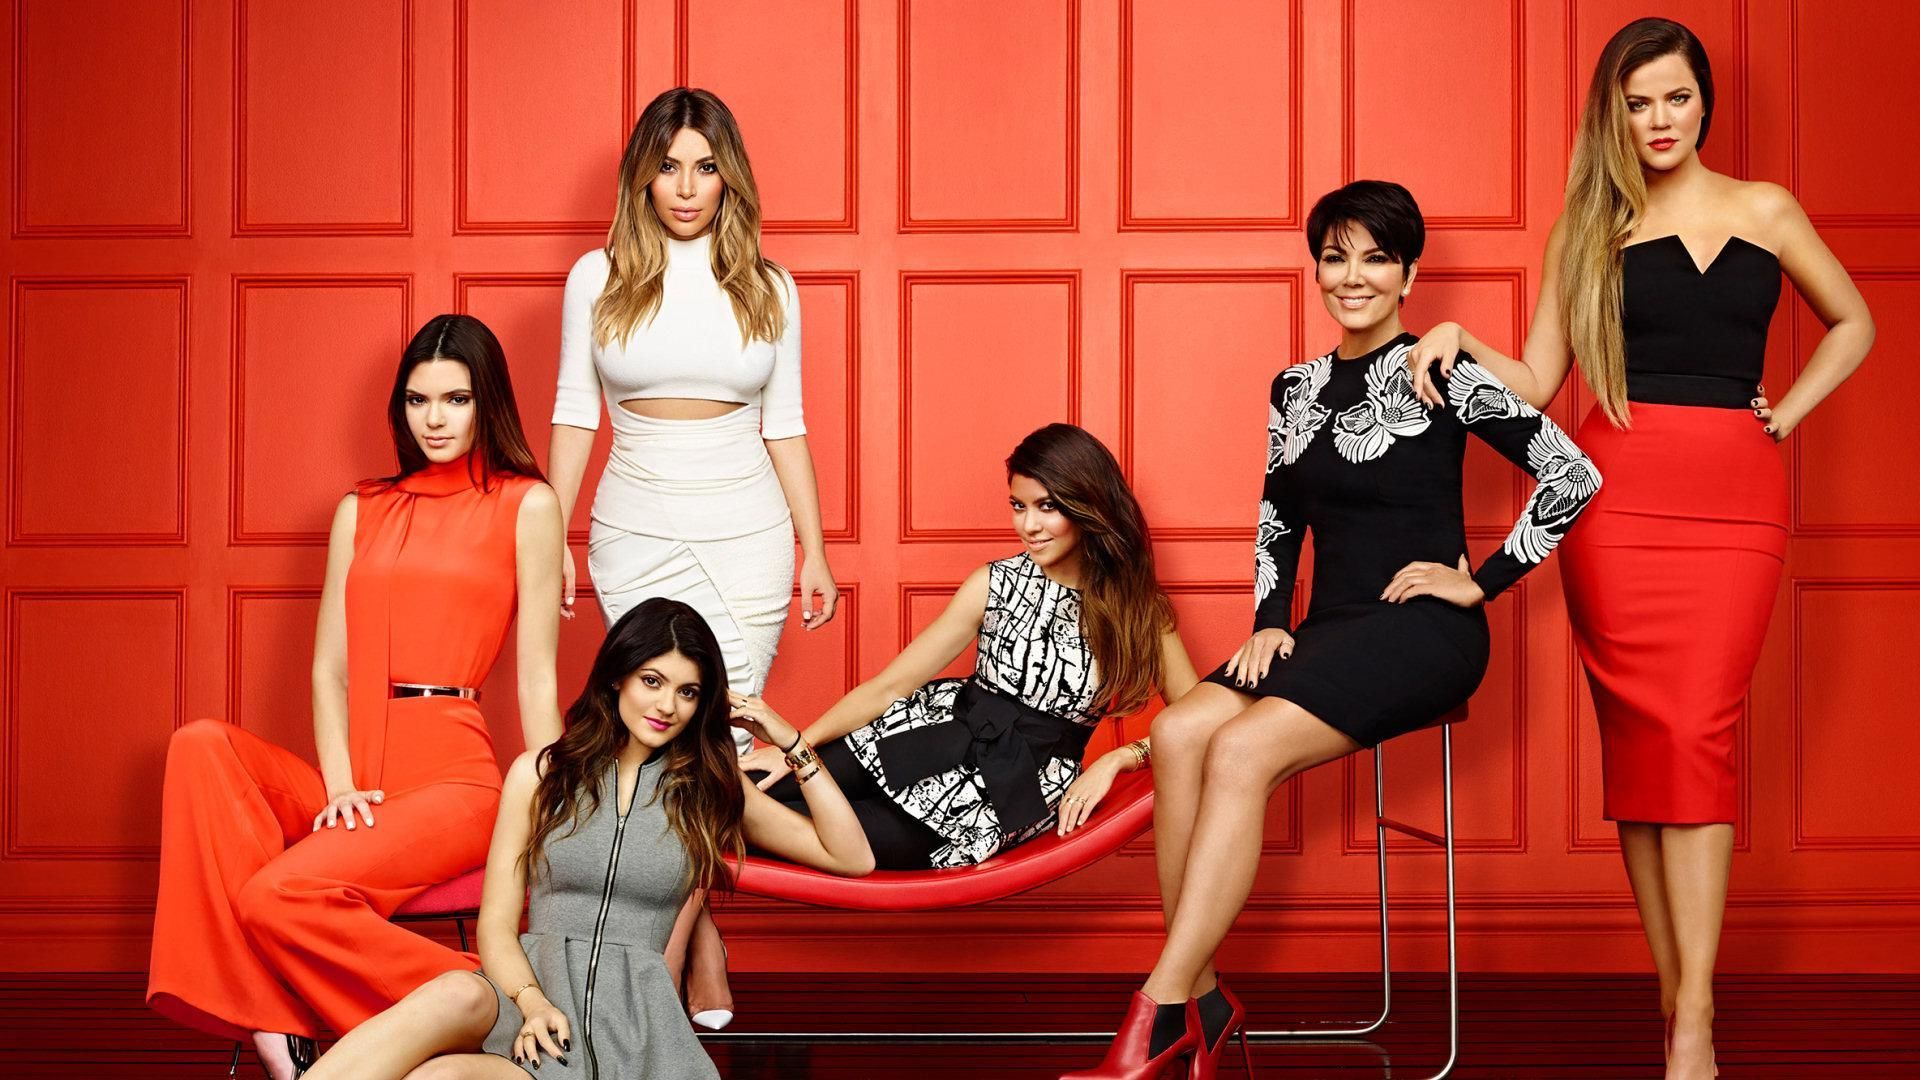 Celebrities Insult the Kardashians